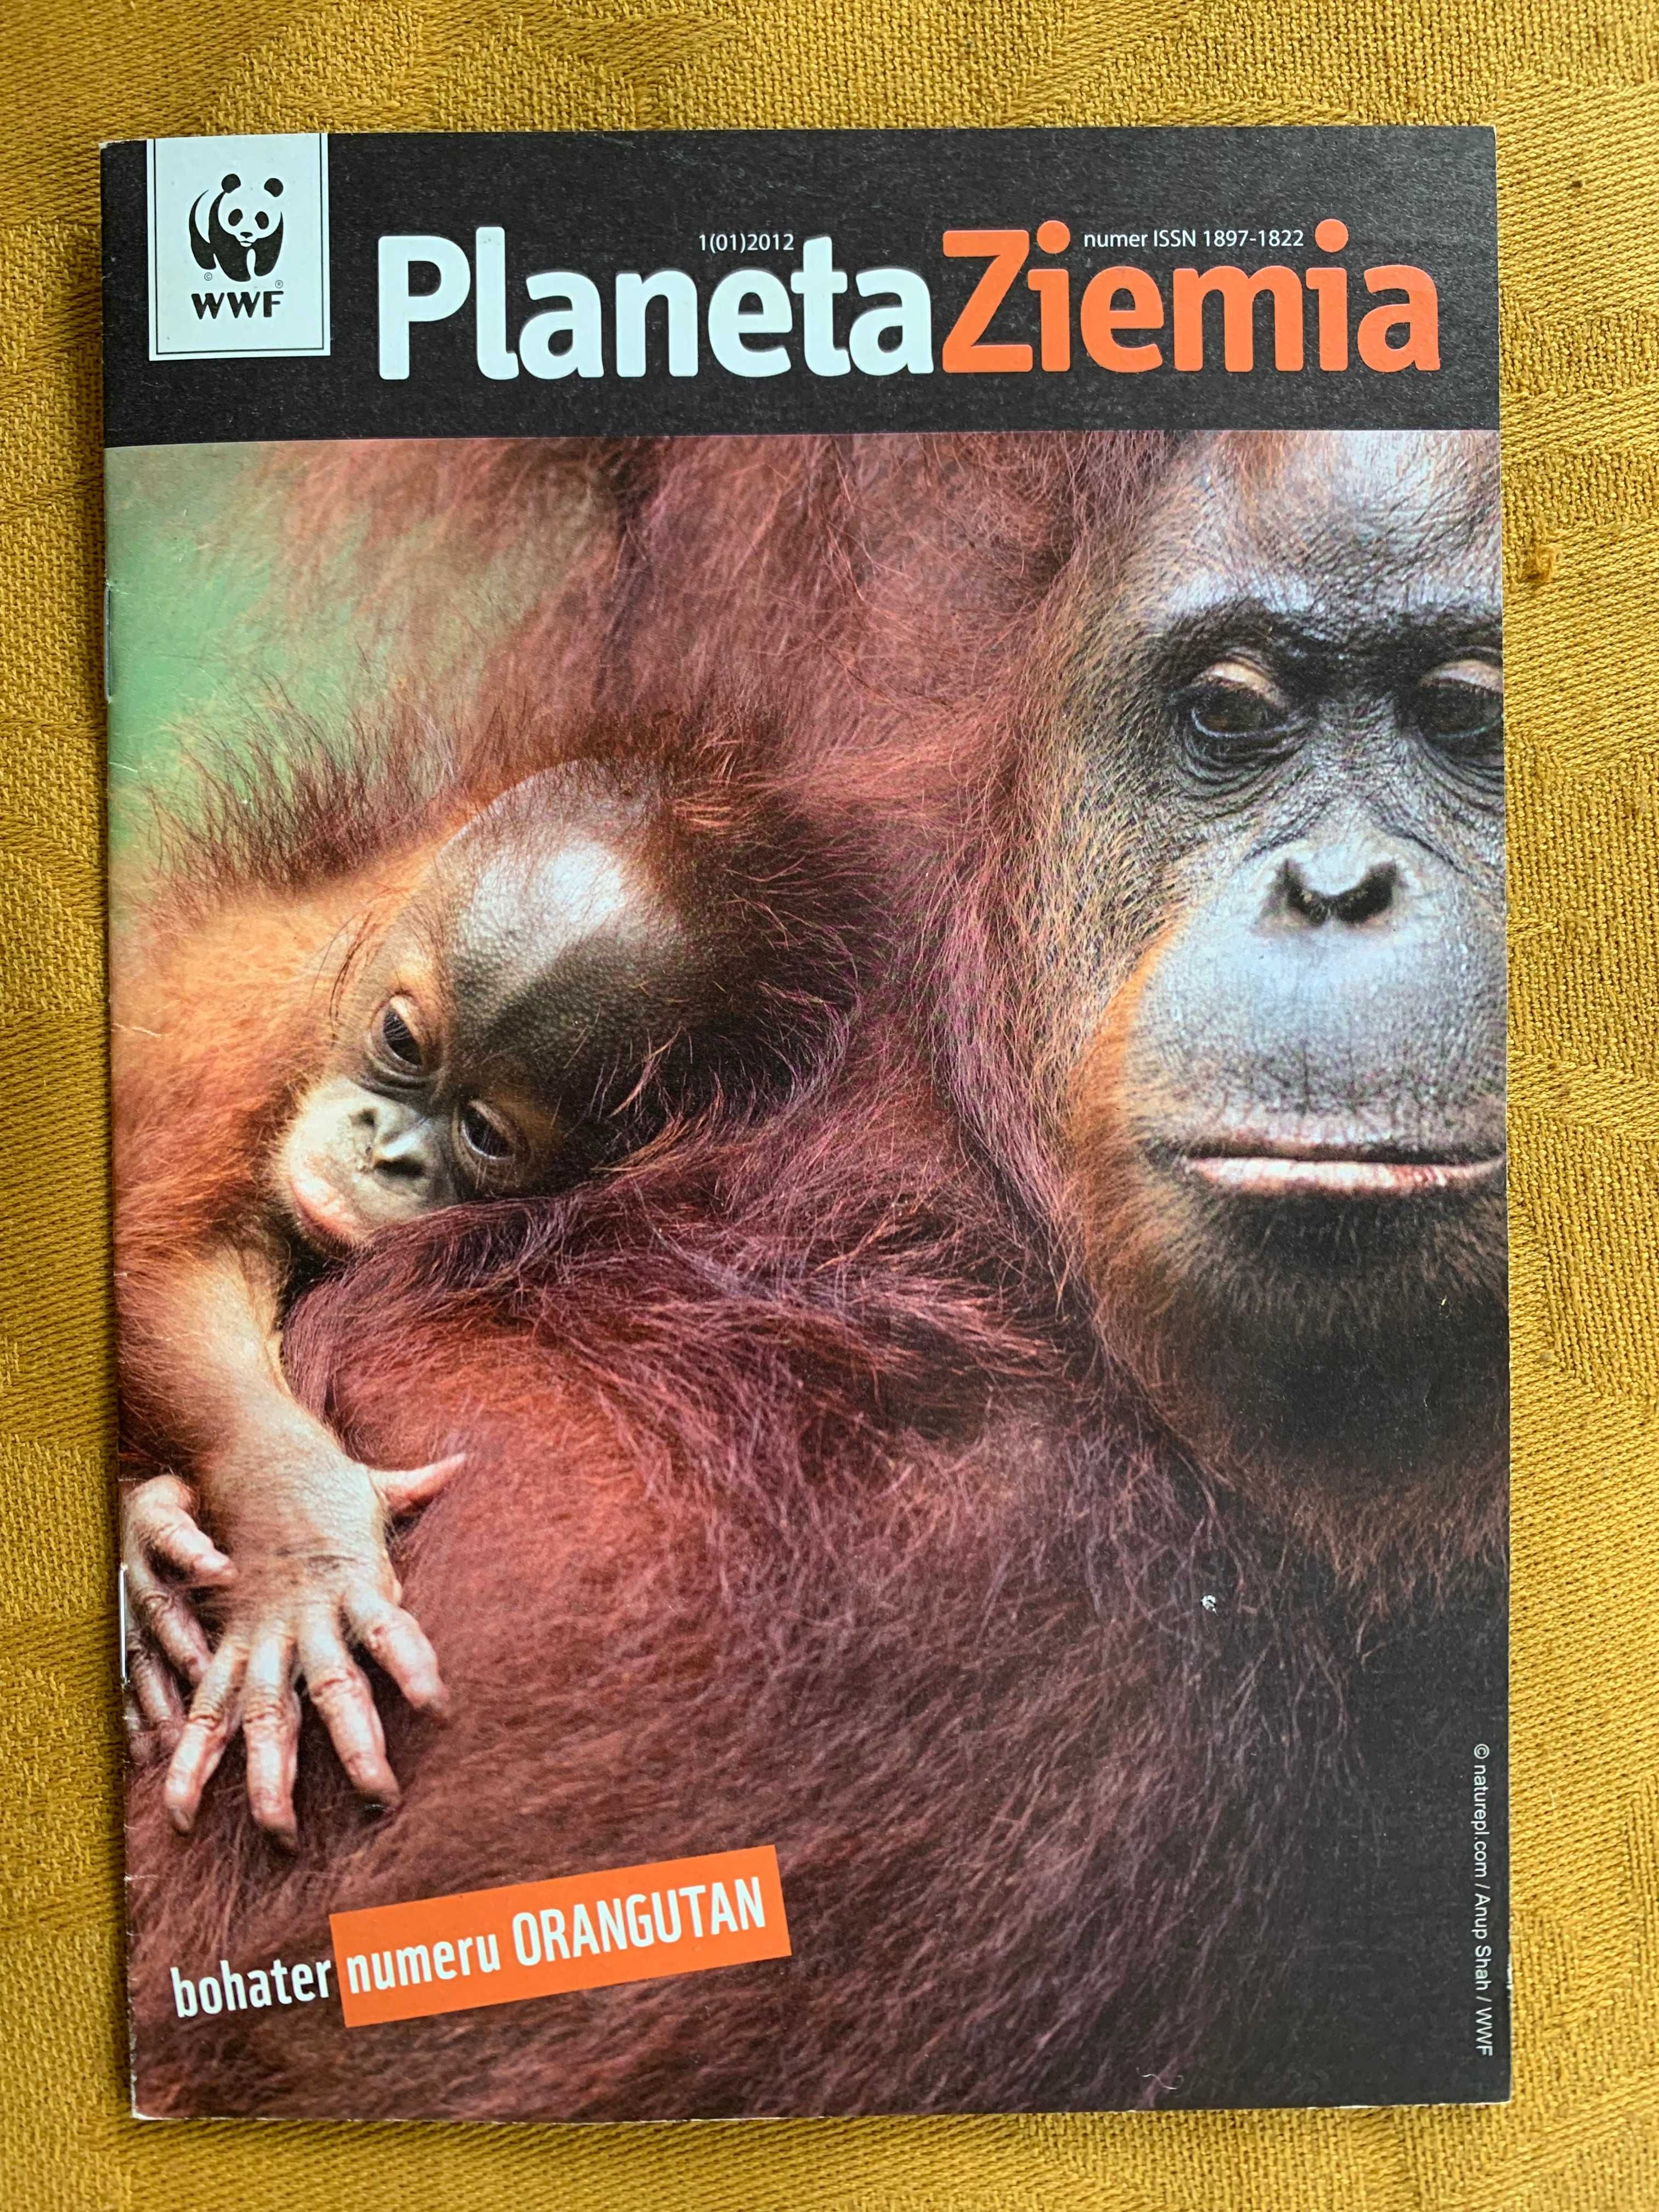 Planeta Ziemia - bohater numeru orangutan - WWF